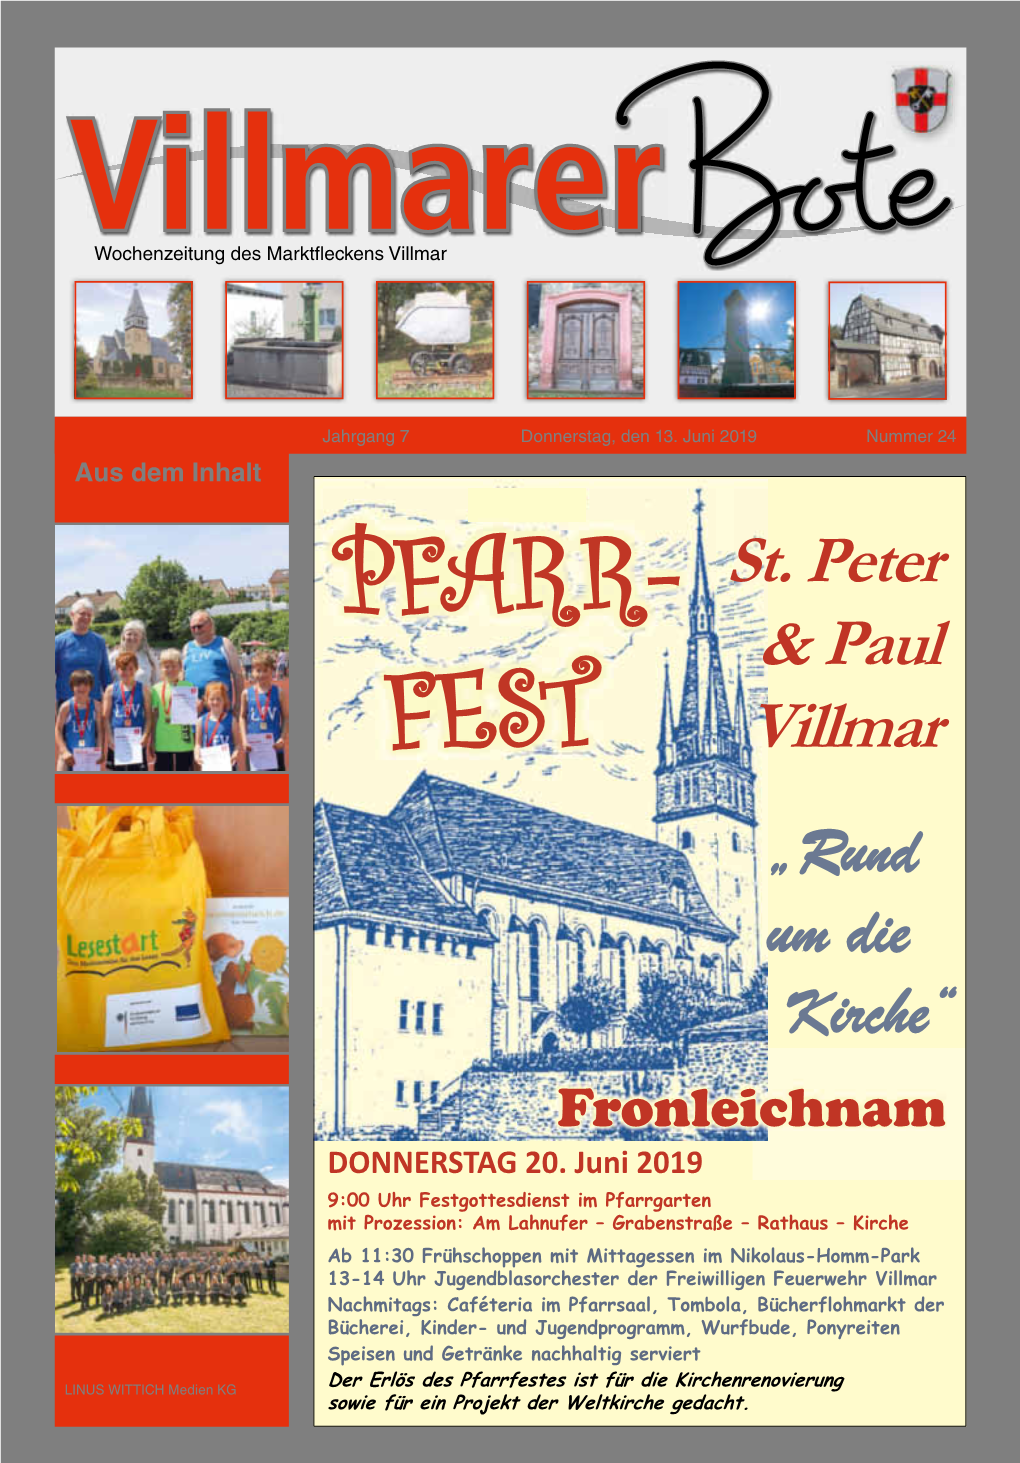 Pfarr- Fest Wegverlauf:Pfarrgarten -Peter-Paul-Str.-Zehntenstr.- Burgstr.-Leonhardstr